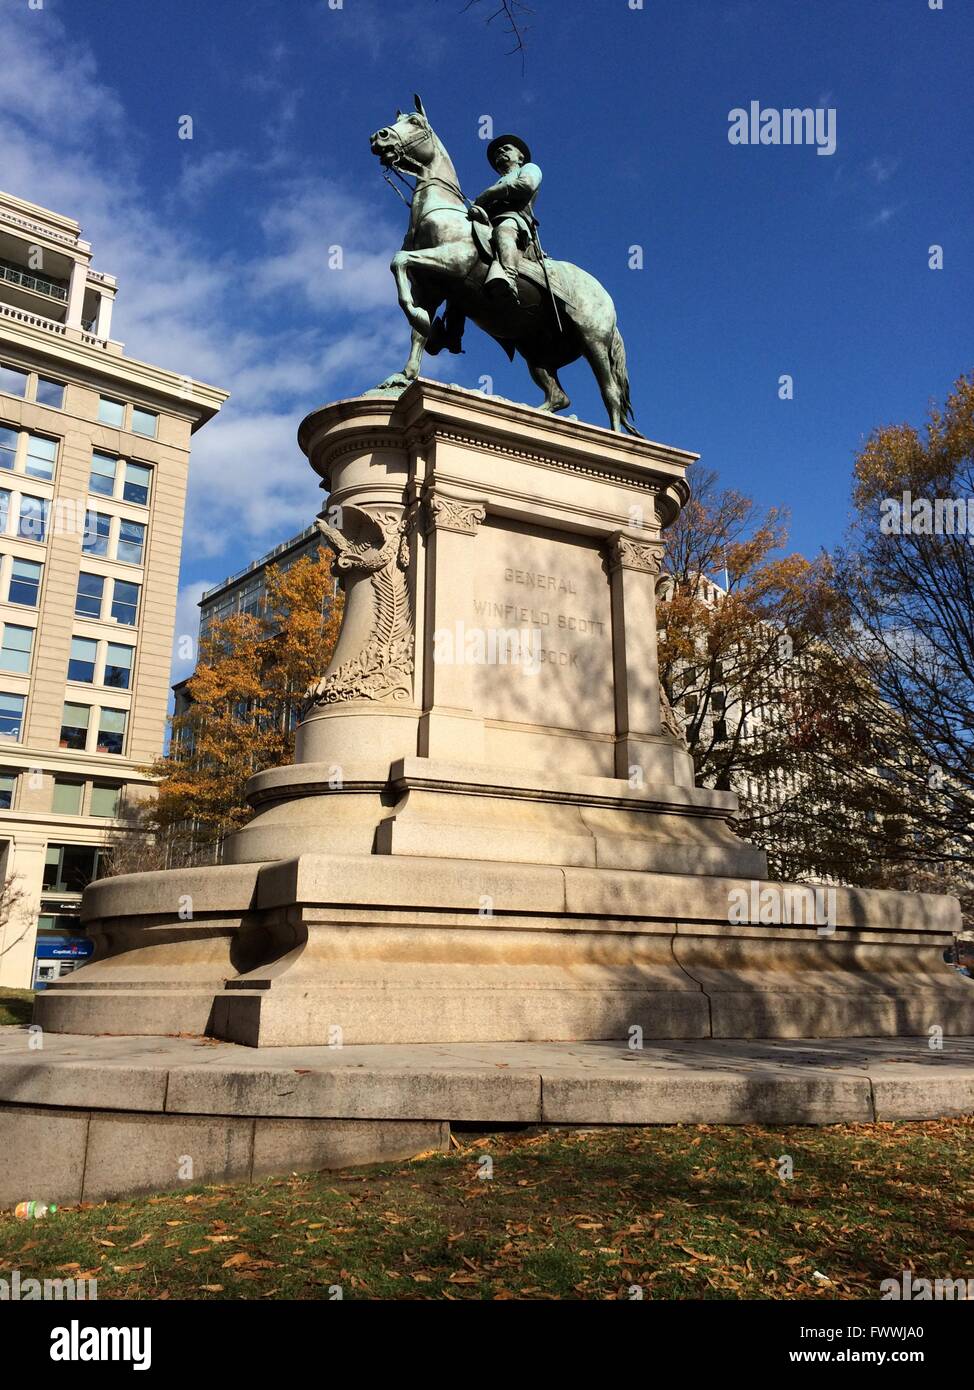 Washington, D.C., USA.  Monument to General Winfield Scott Hancock, Civil War Hero, Democratic Candidate for President in 1880. Stock Photo